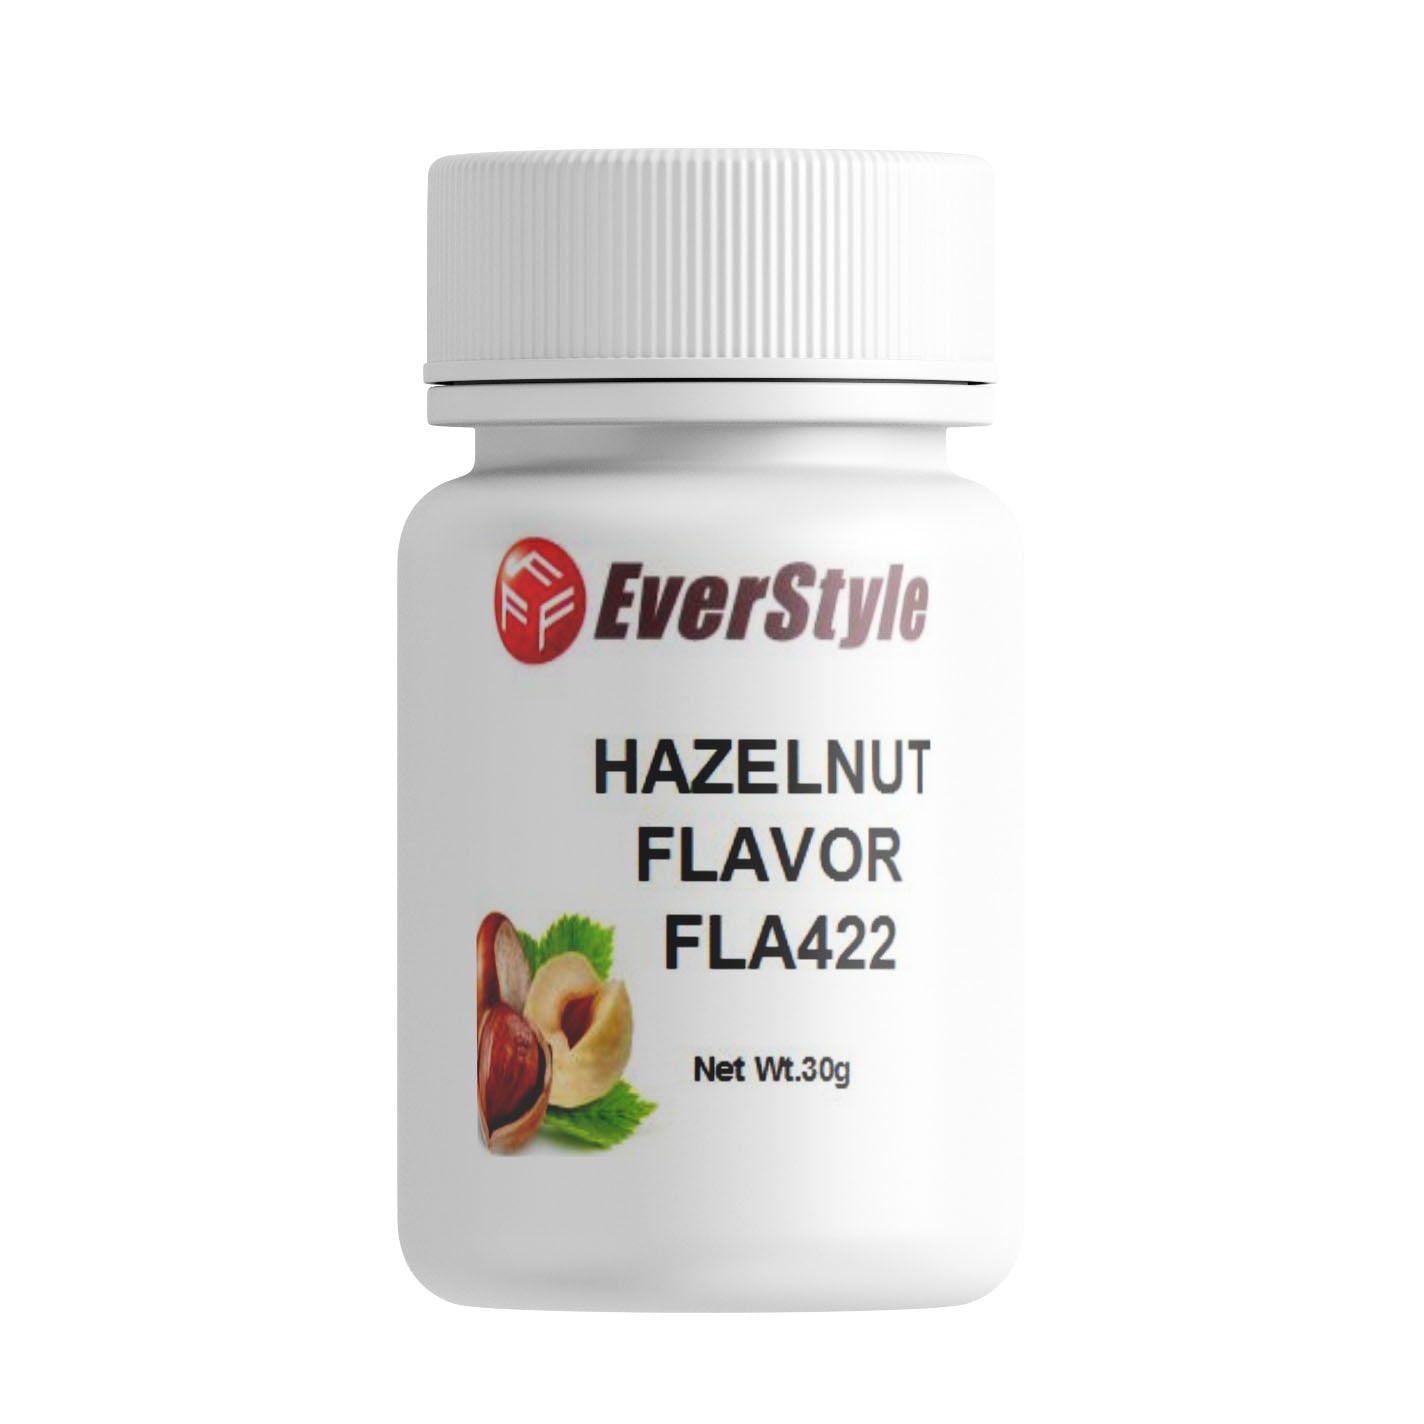 Everstyle Hazelnut Flavor 30g (FLA422)